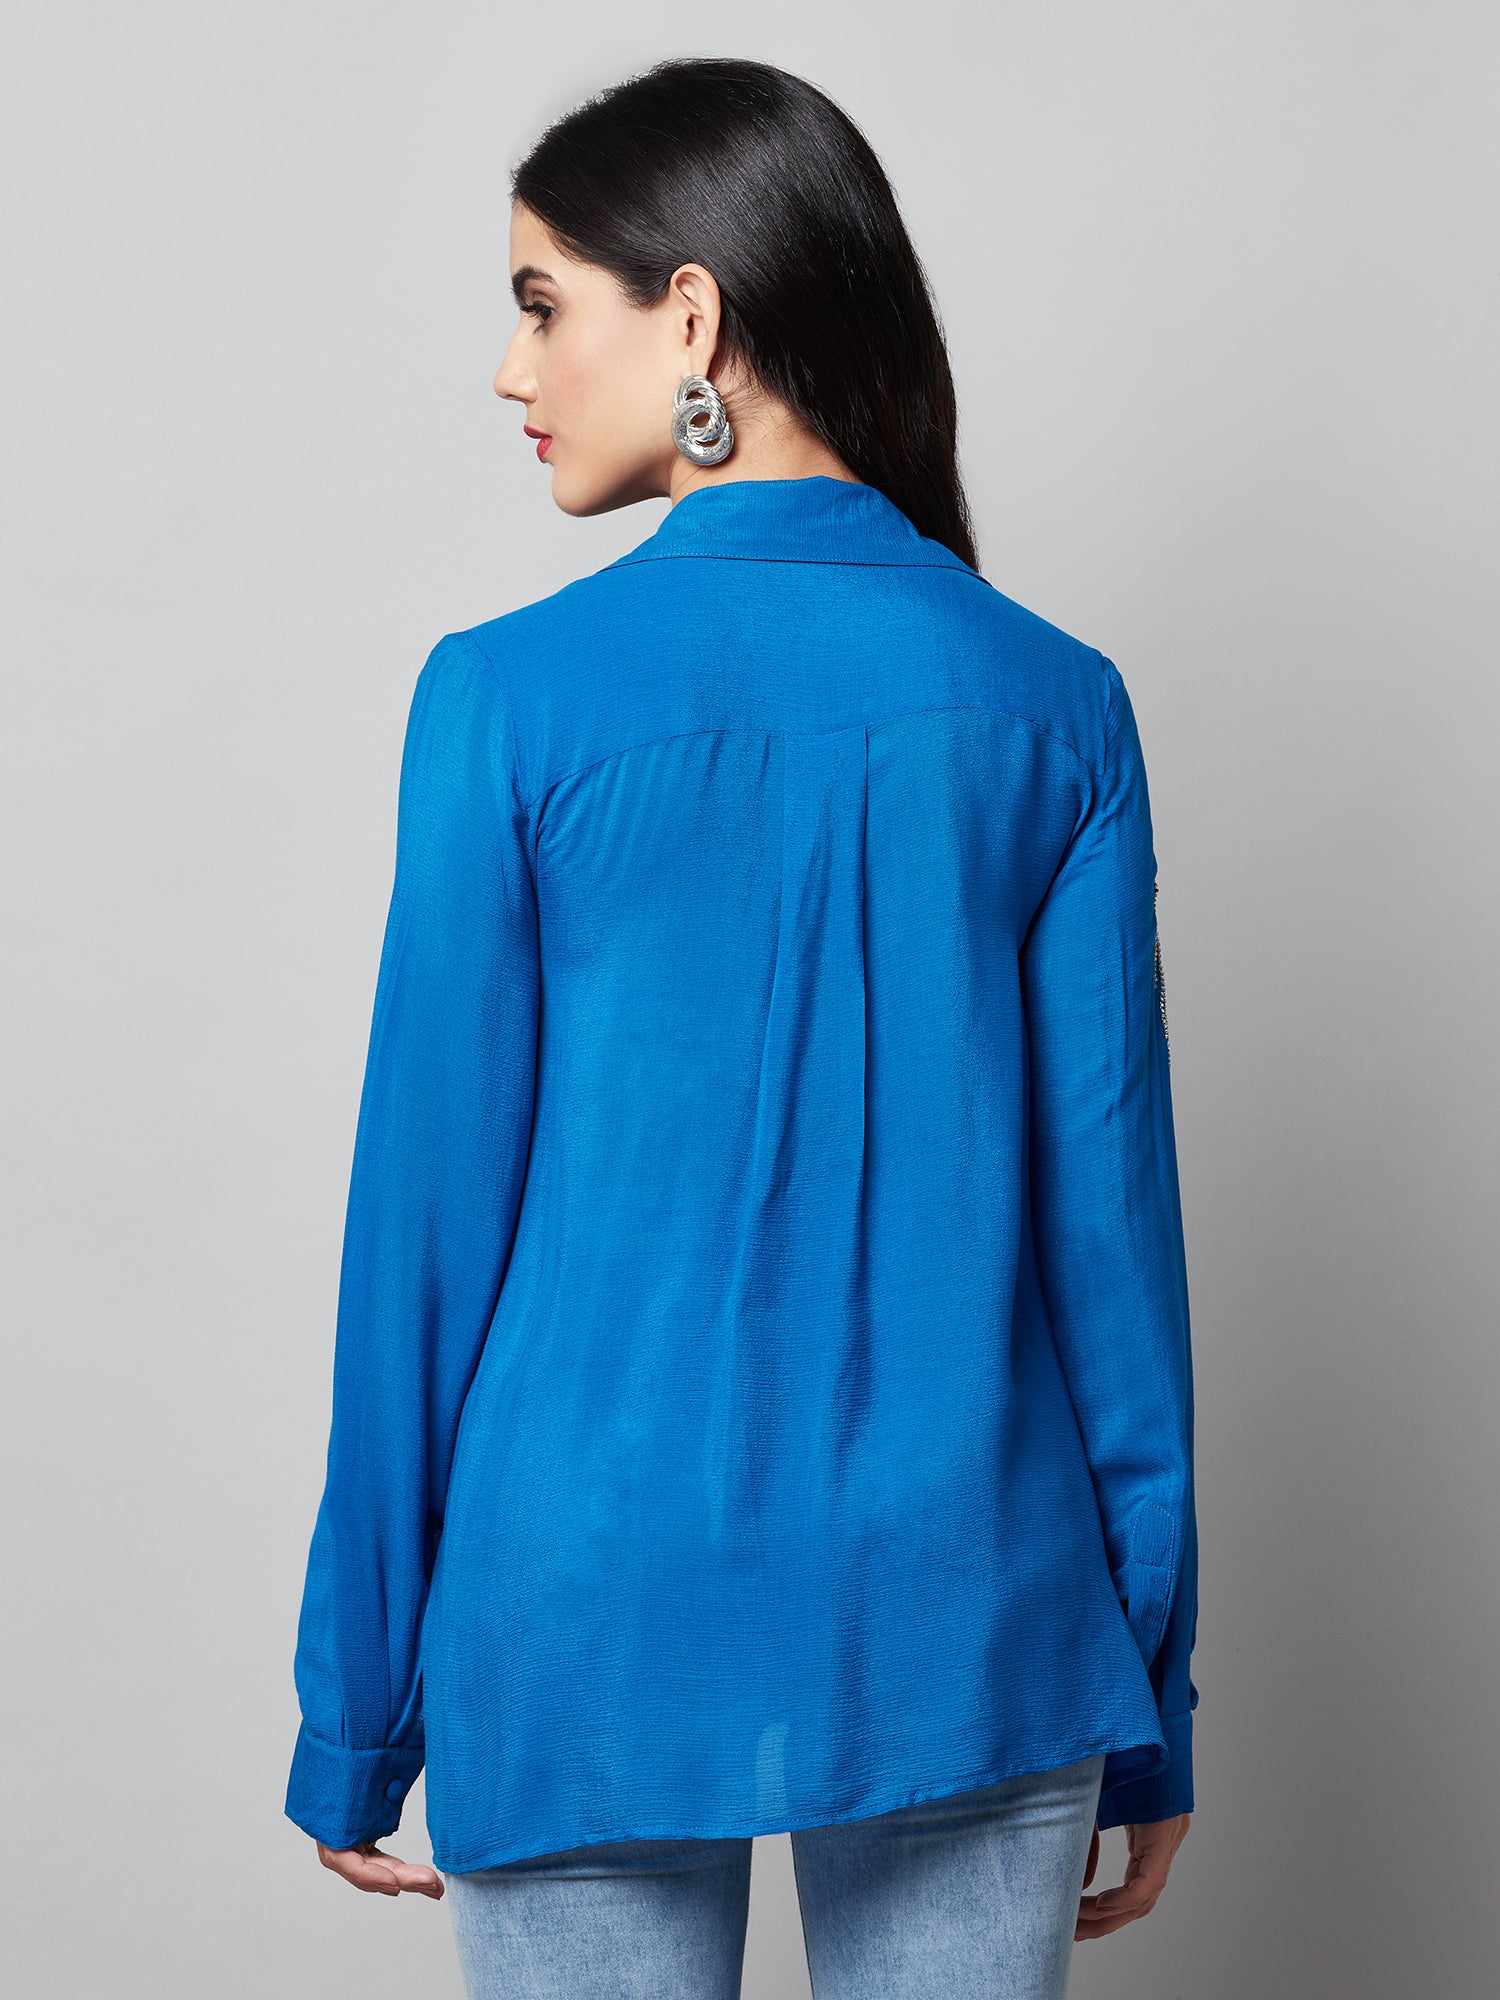 deluxe embellished blue shirt  